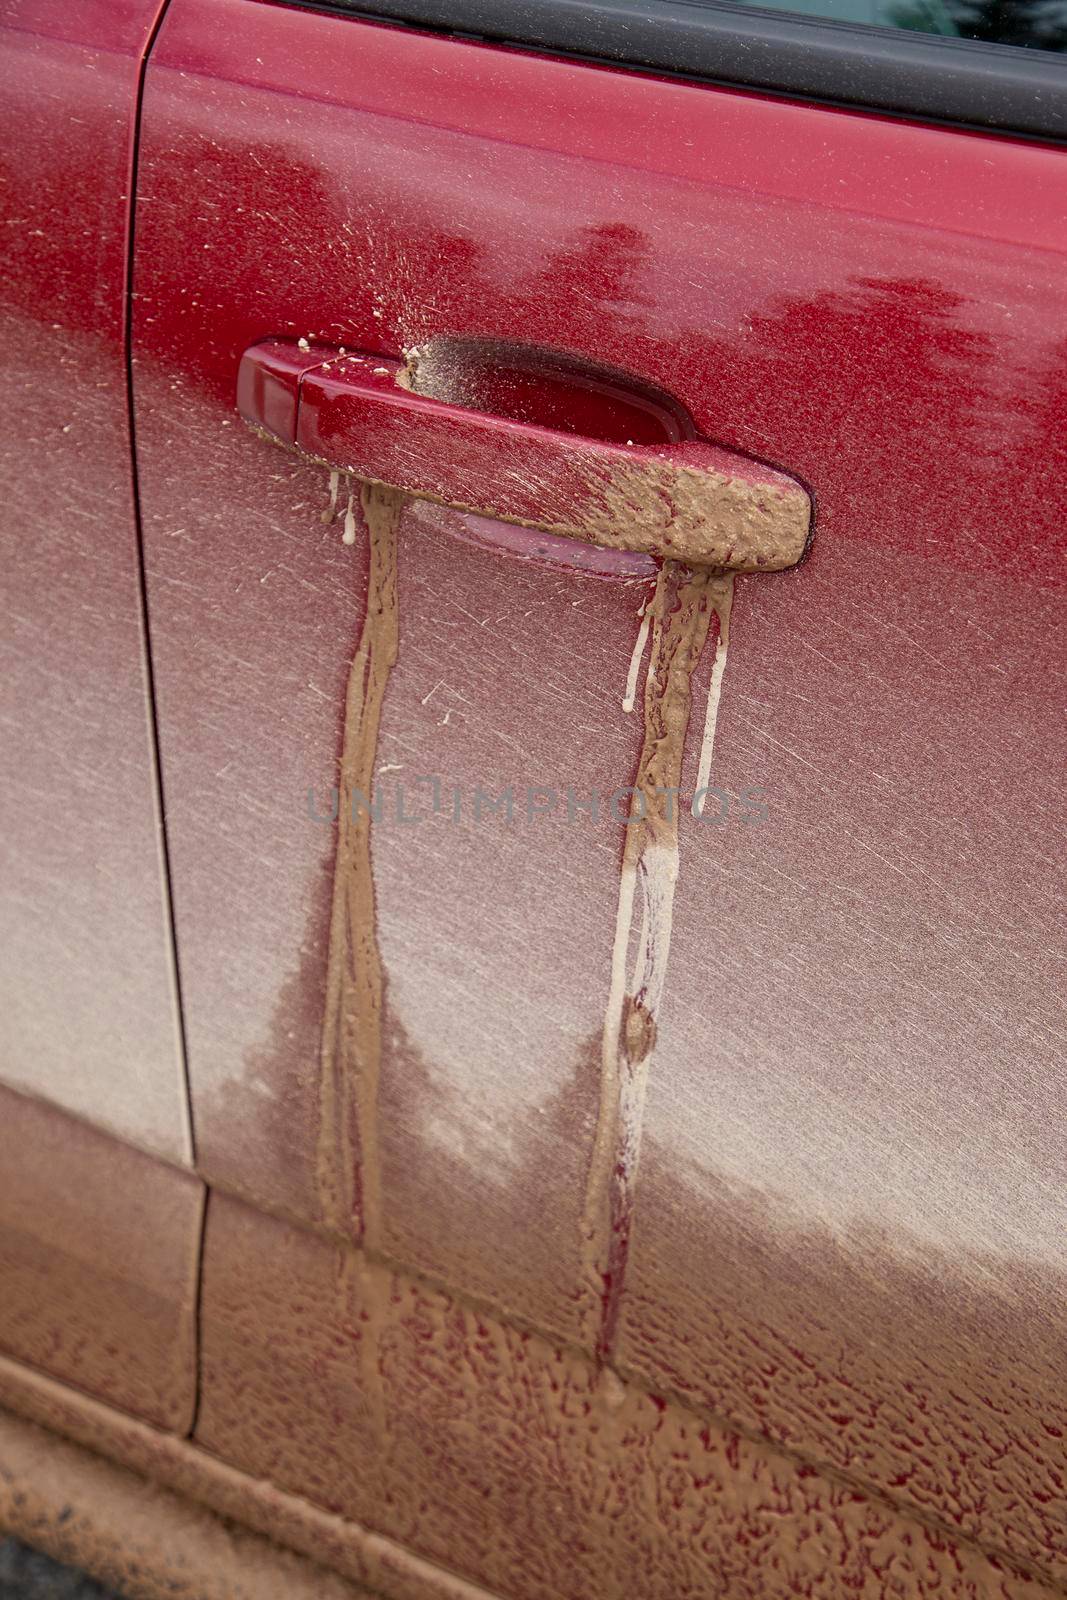 pickup truck door handle is covered in mud from off road adventuring